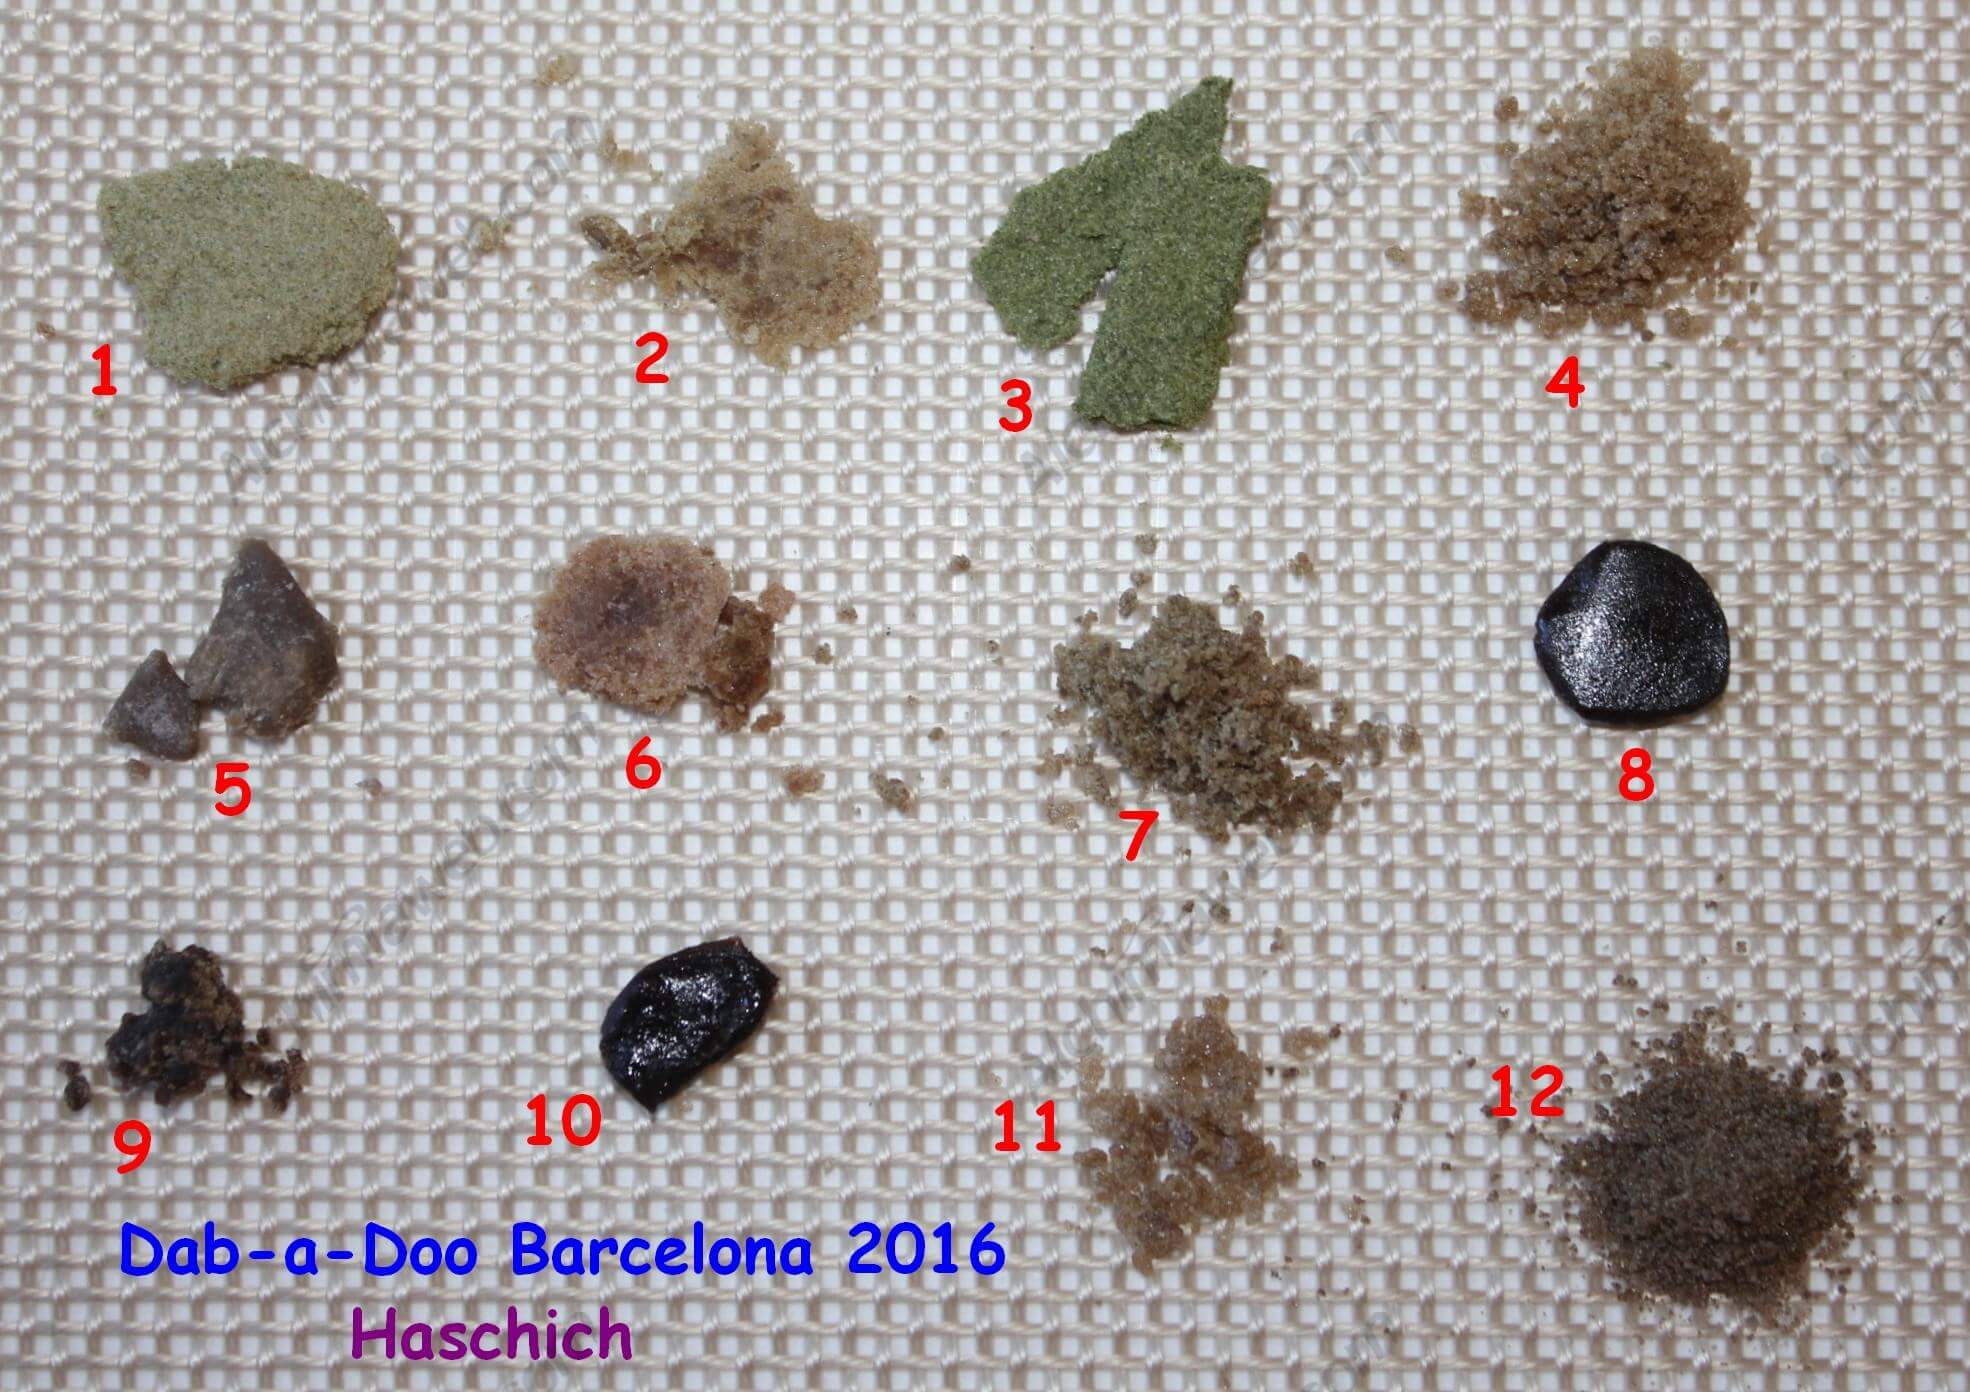 Échantillons de haschich de la Dab-a-Doo 2016 de Barcelone